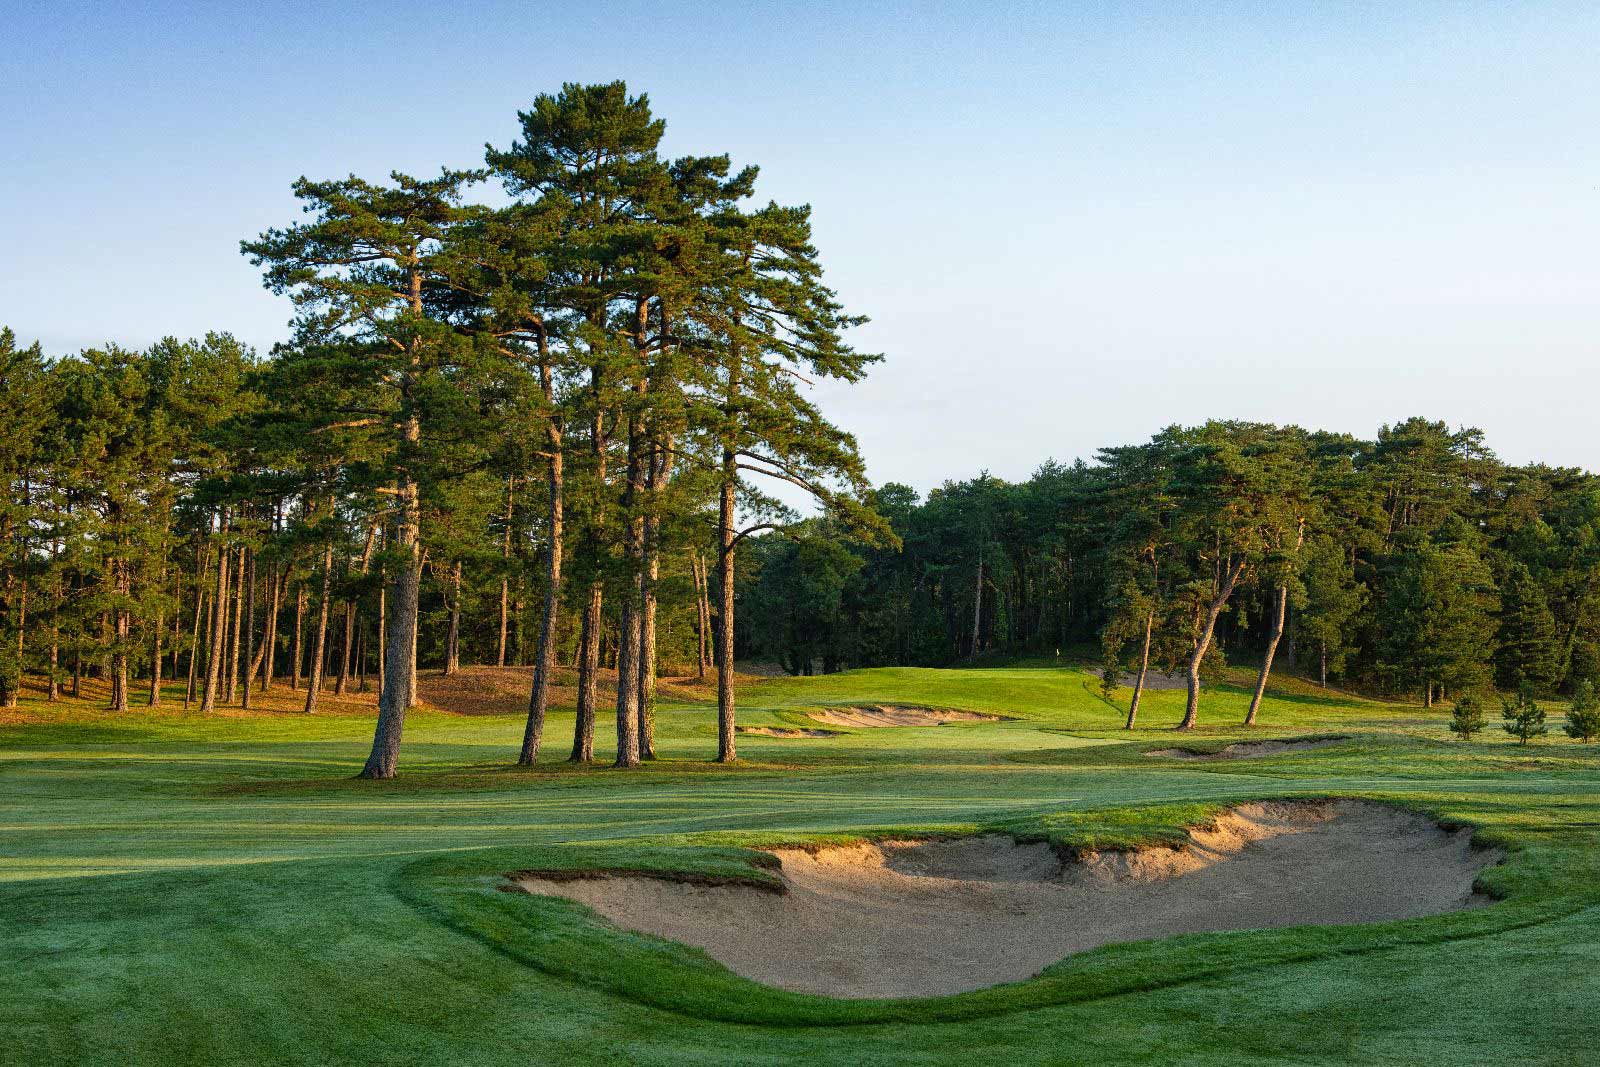 golf expedition golf reizen frankrijk regio pas de calais le manoir hotel golfbaan in natuur.jpg